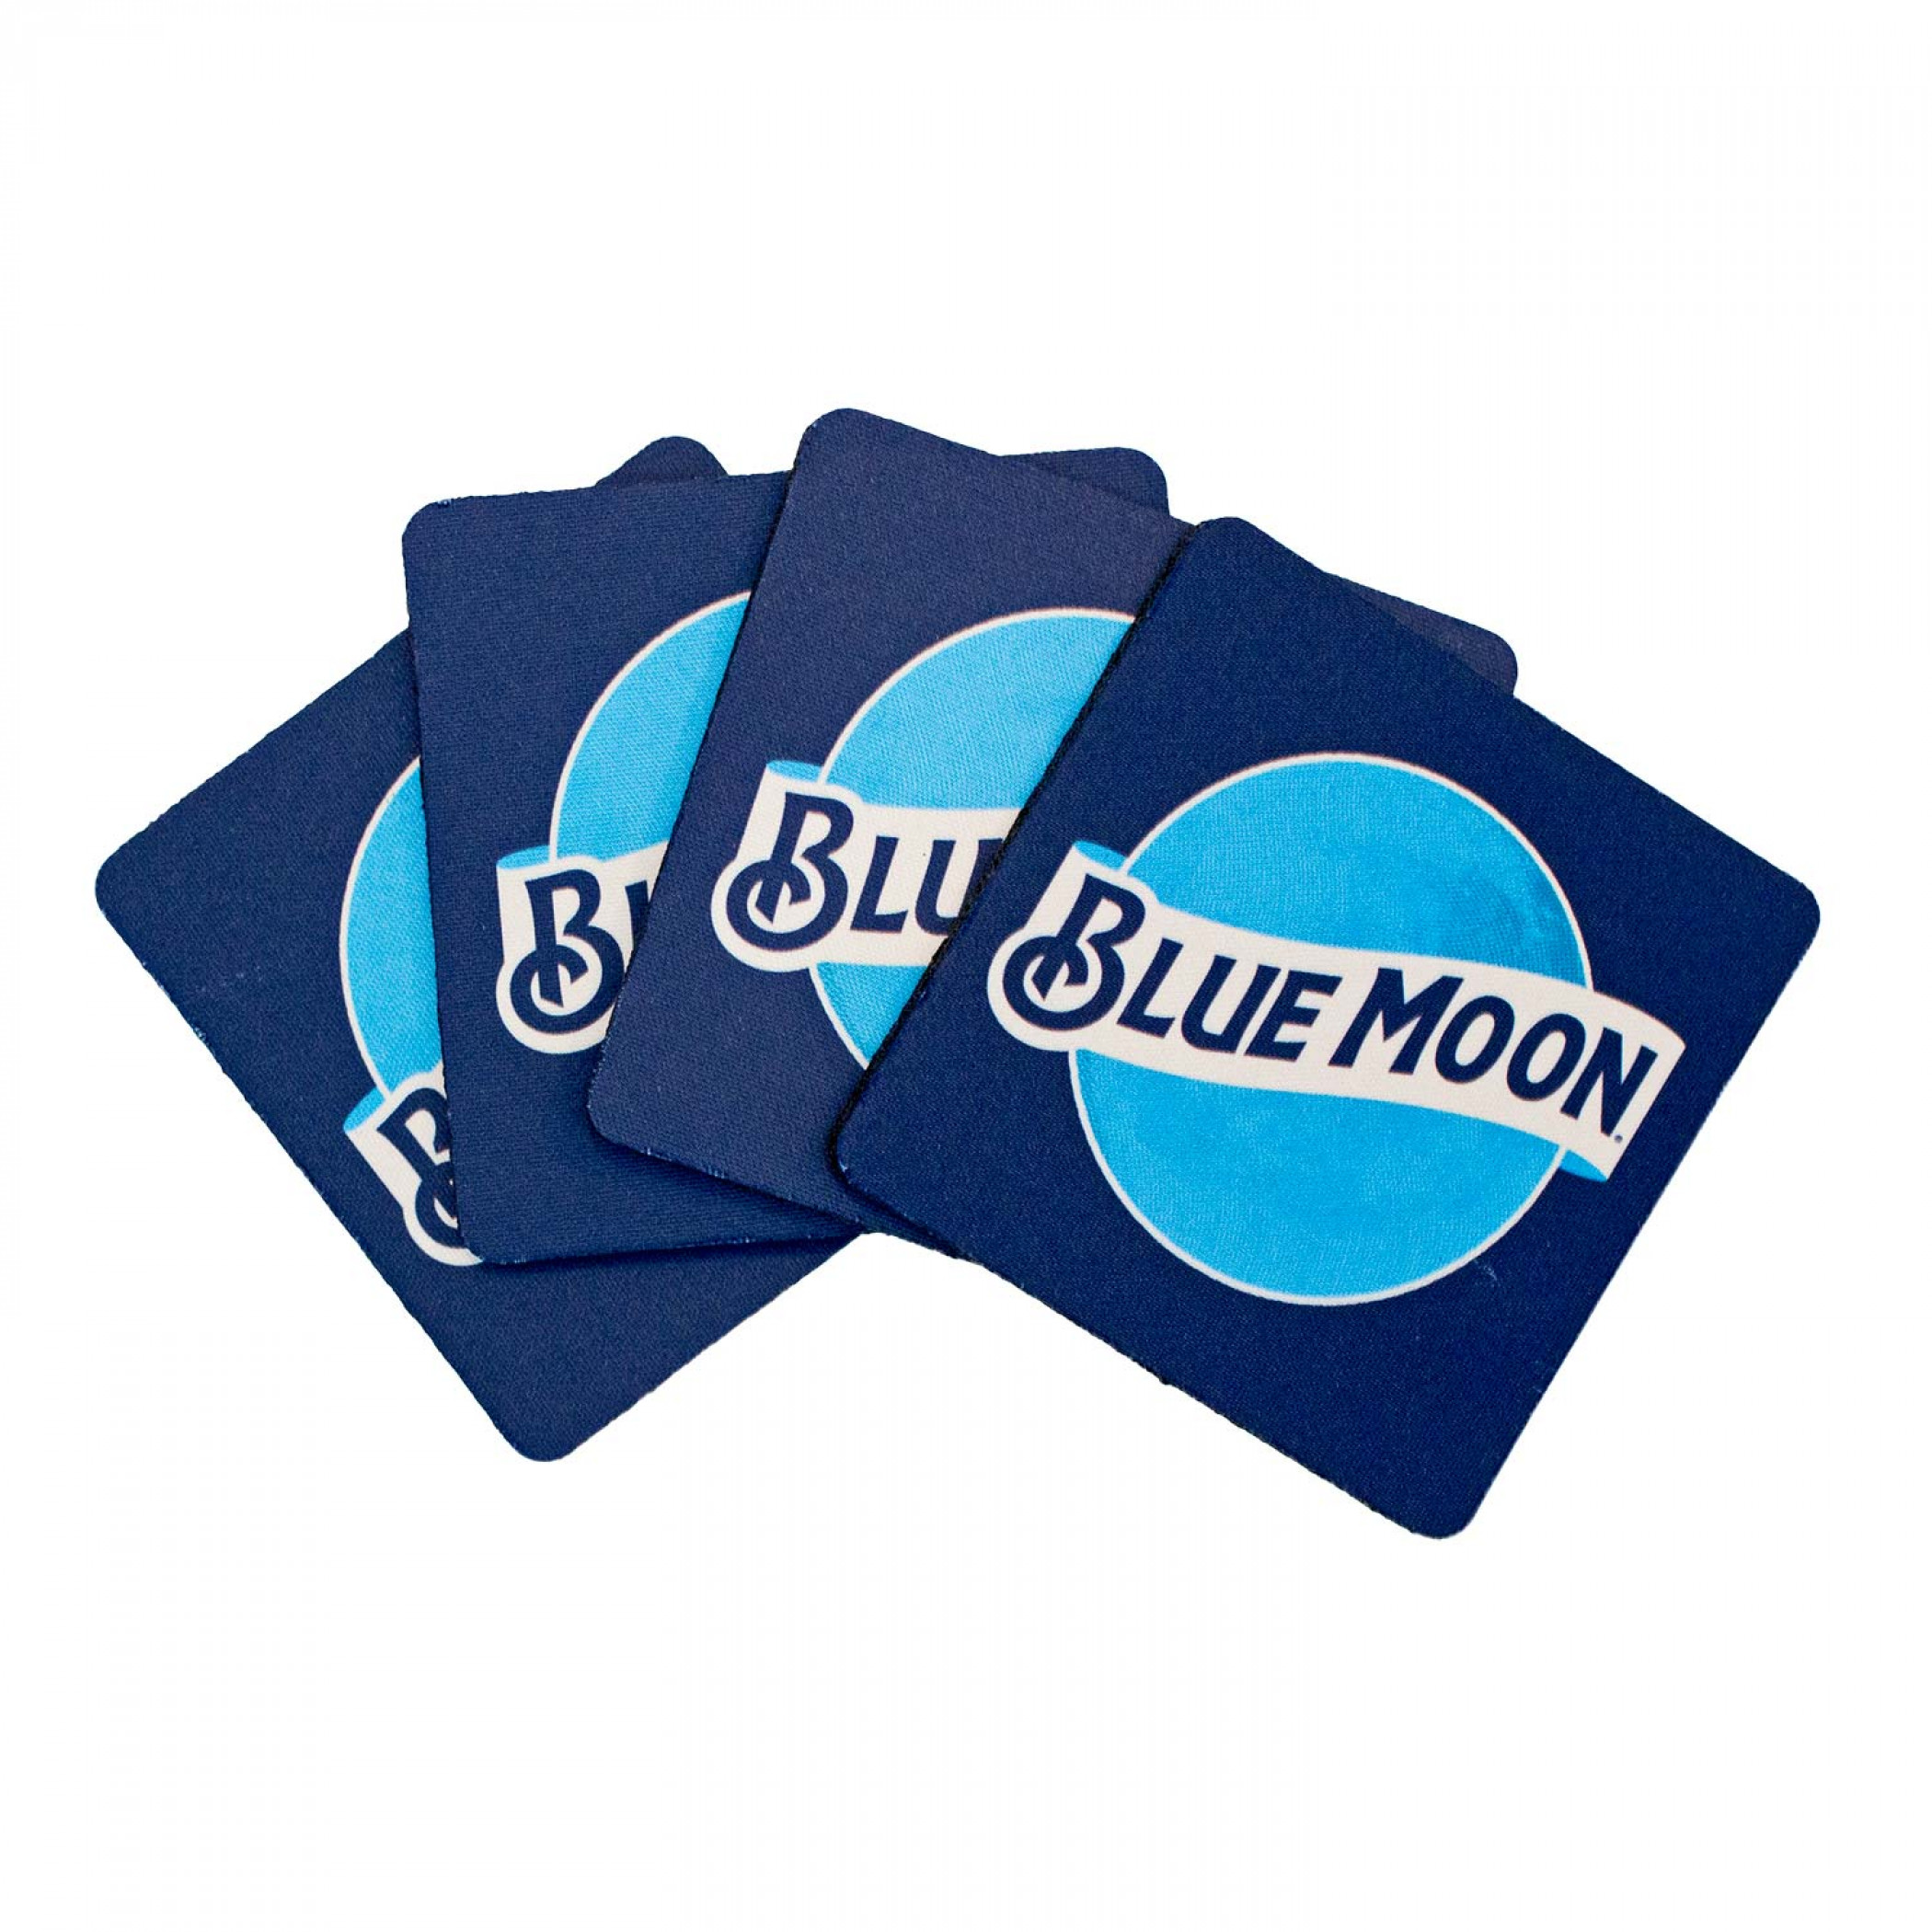 Blue Moon Neoprene Coasters